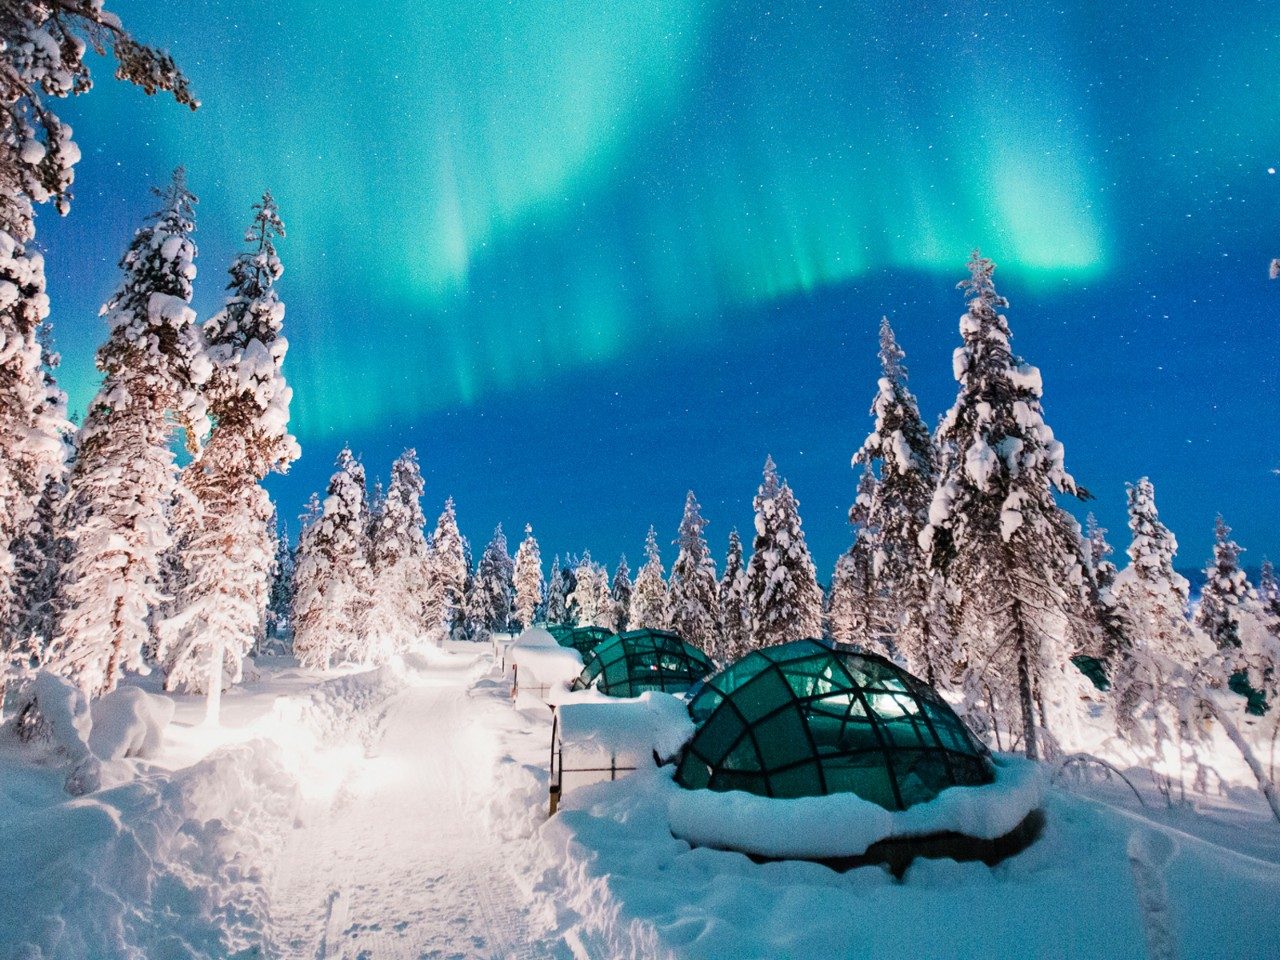 Northern lights - Finland